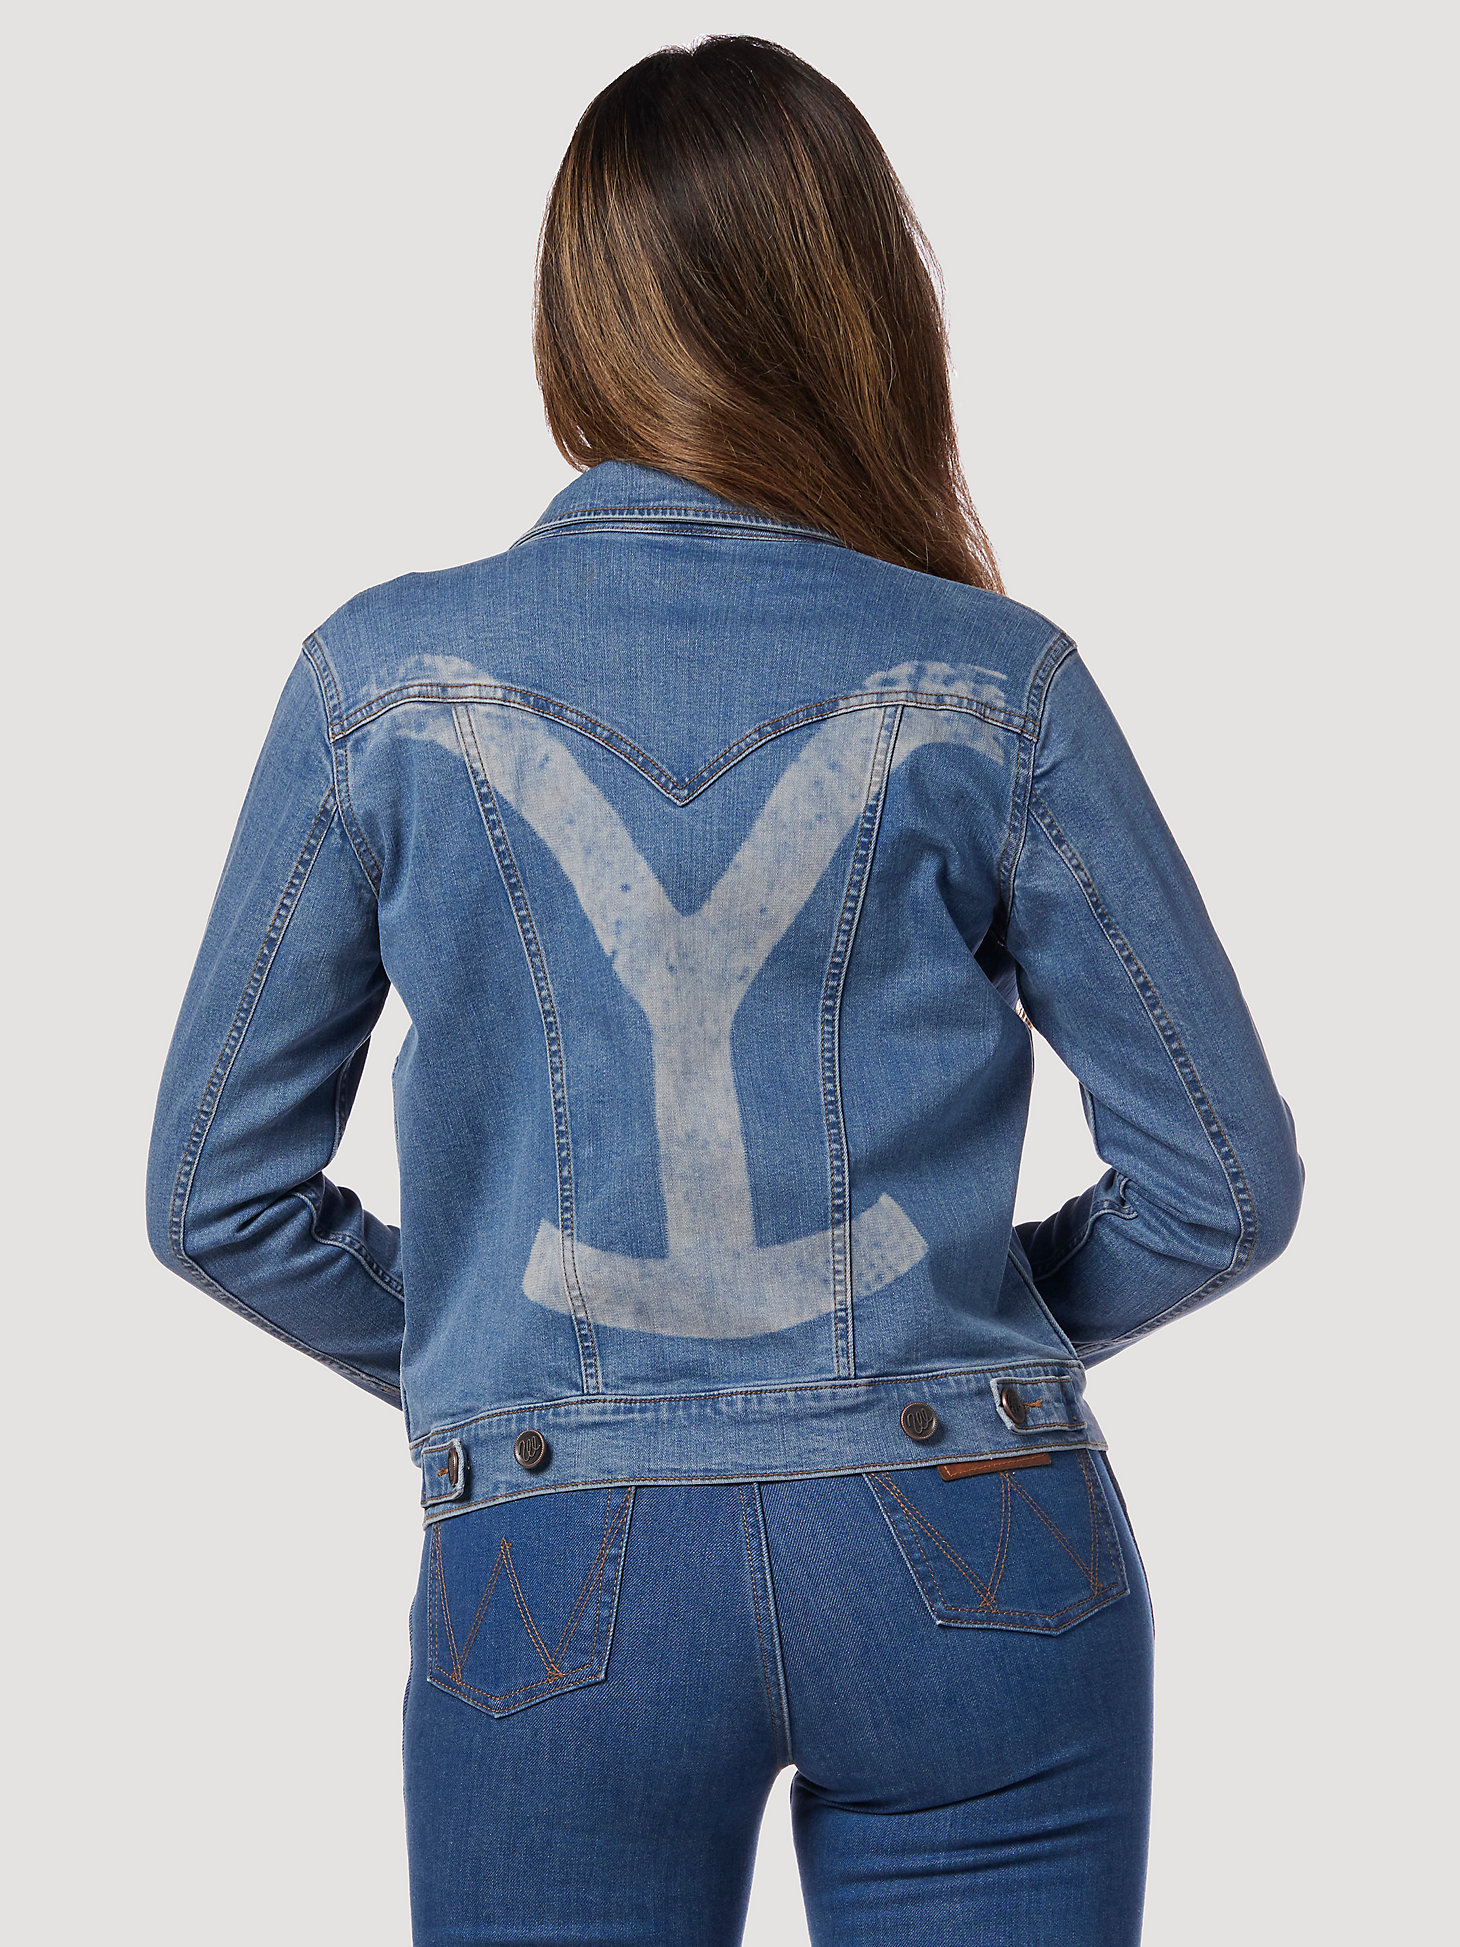 Wrangler x Yellowstone Women's Laser Denim Jacket in Medium Wash alternative view 1